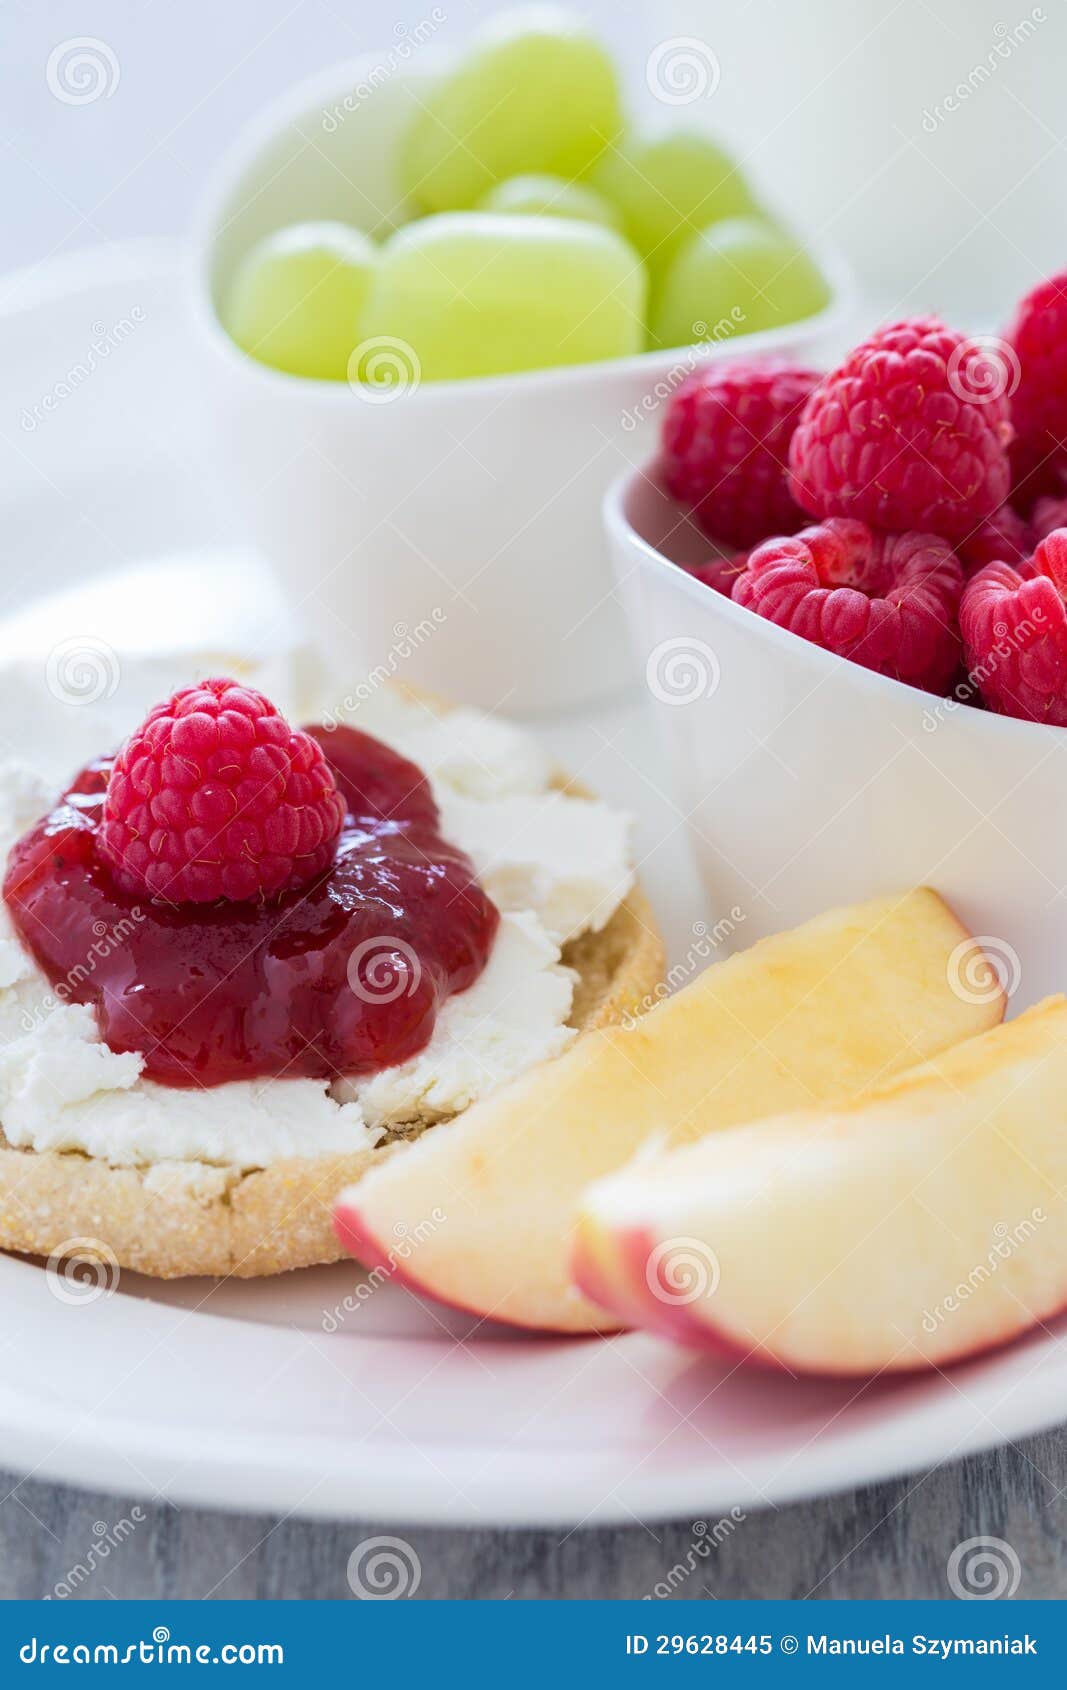 Healthy Breakfast Royalty Free Stock Photo - Image: 29628445